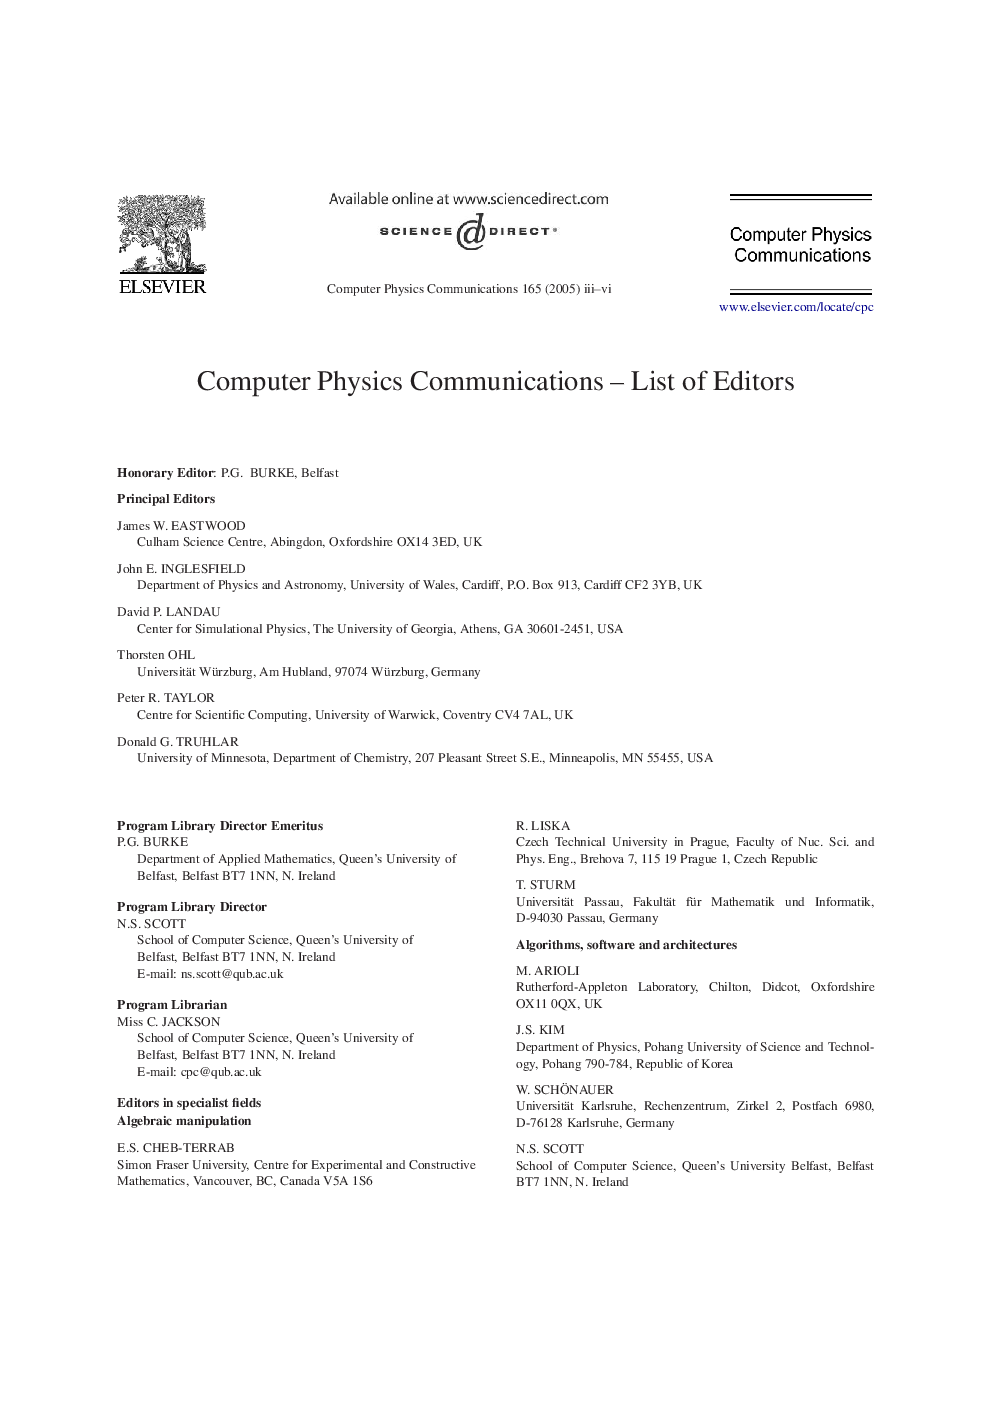 Computer Physics Communications - List of Editors